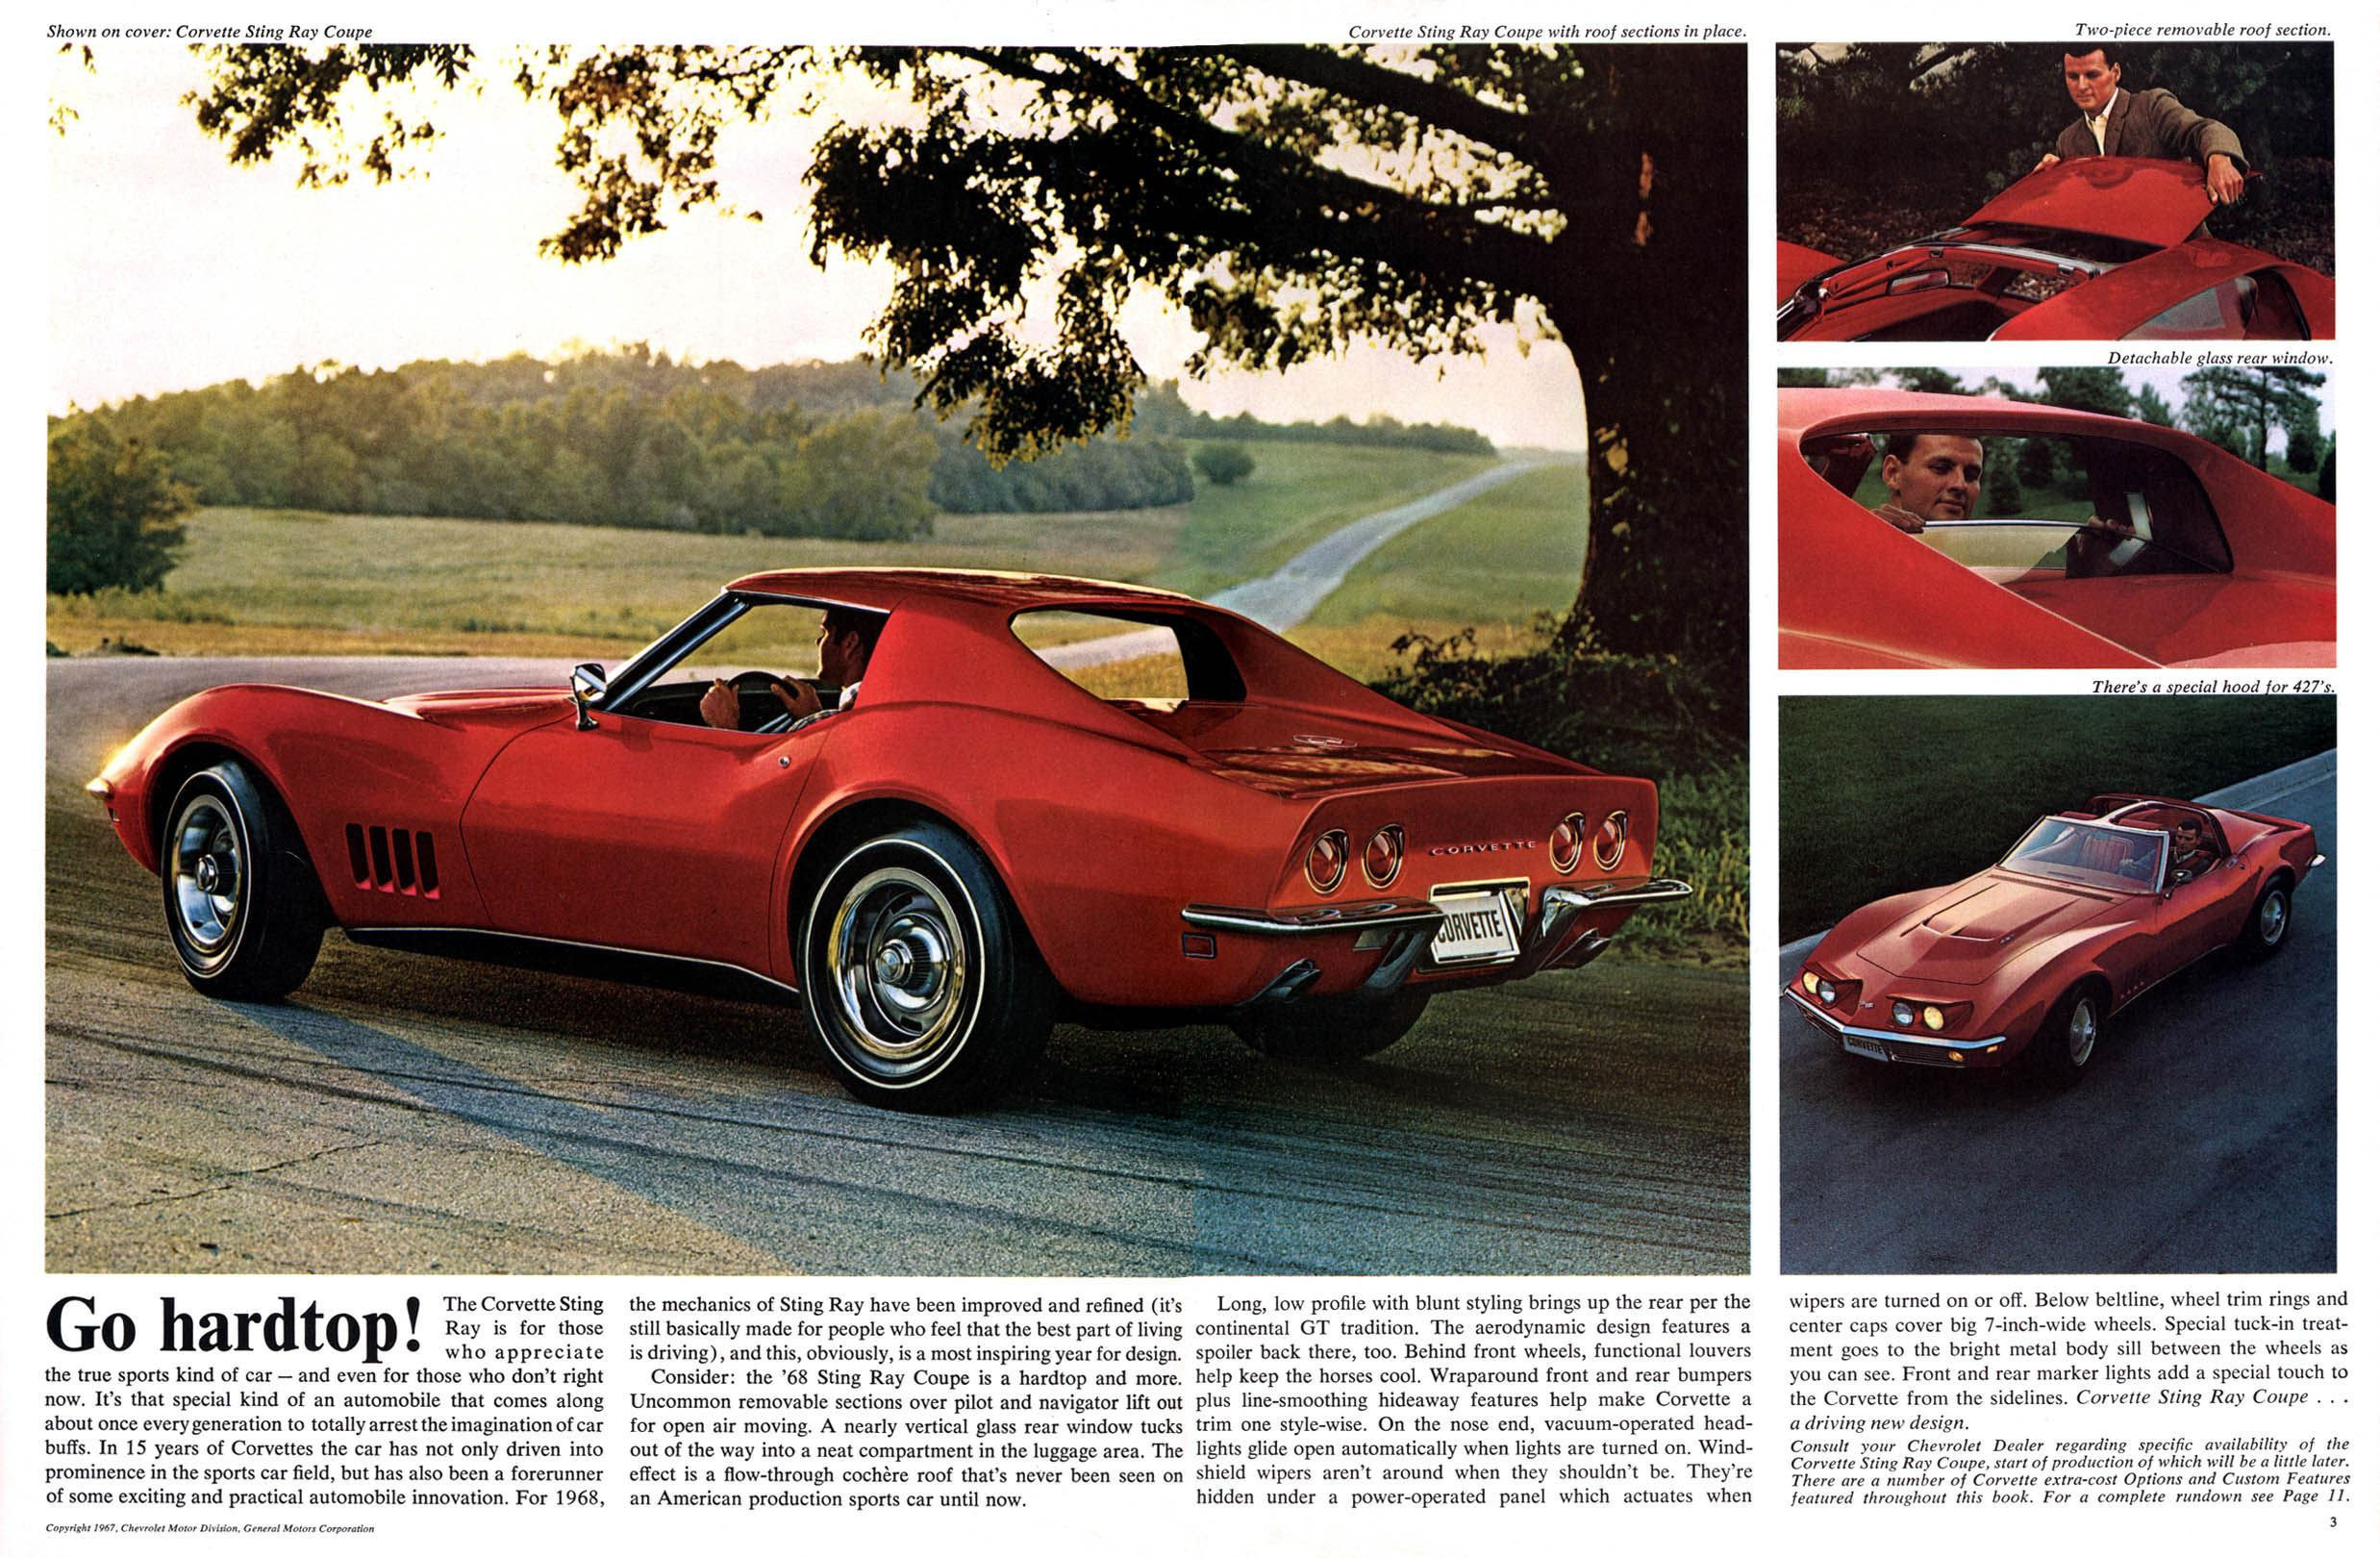 1968_Chevrolet_Corvette-a02-a03